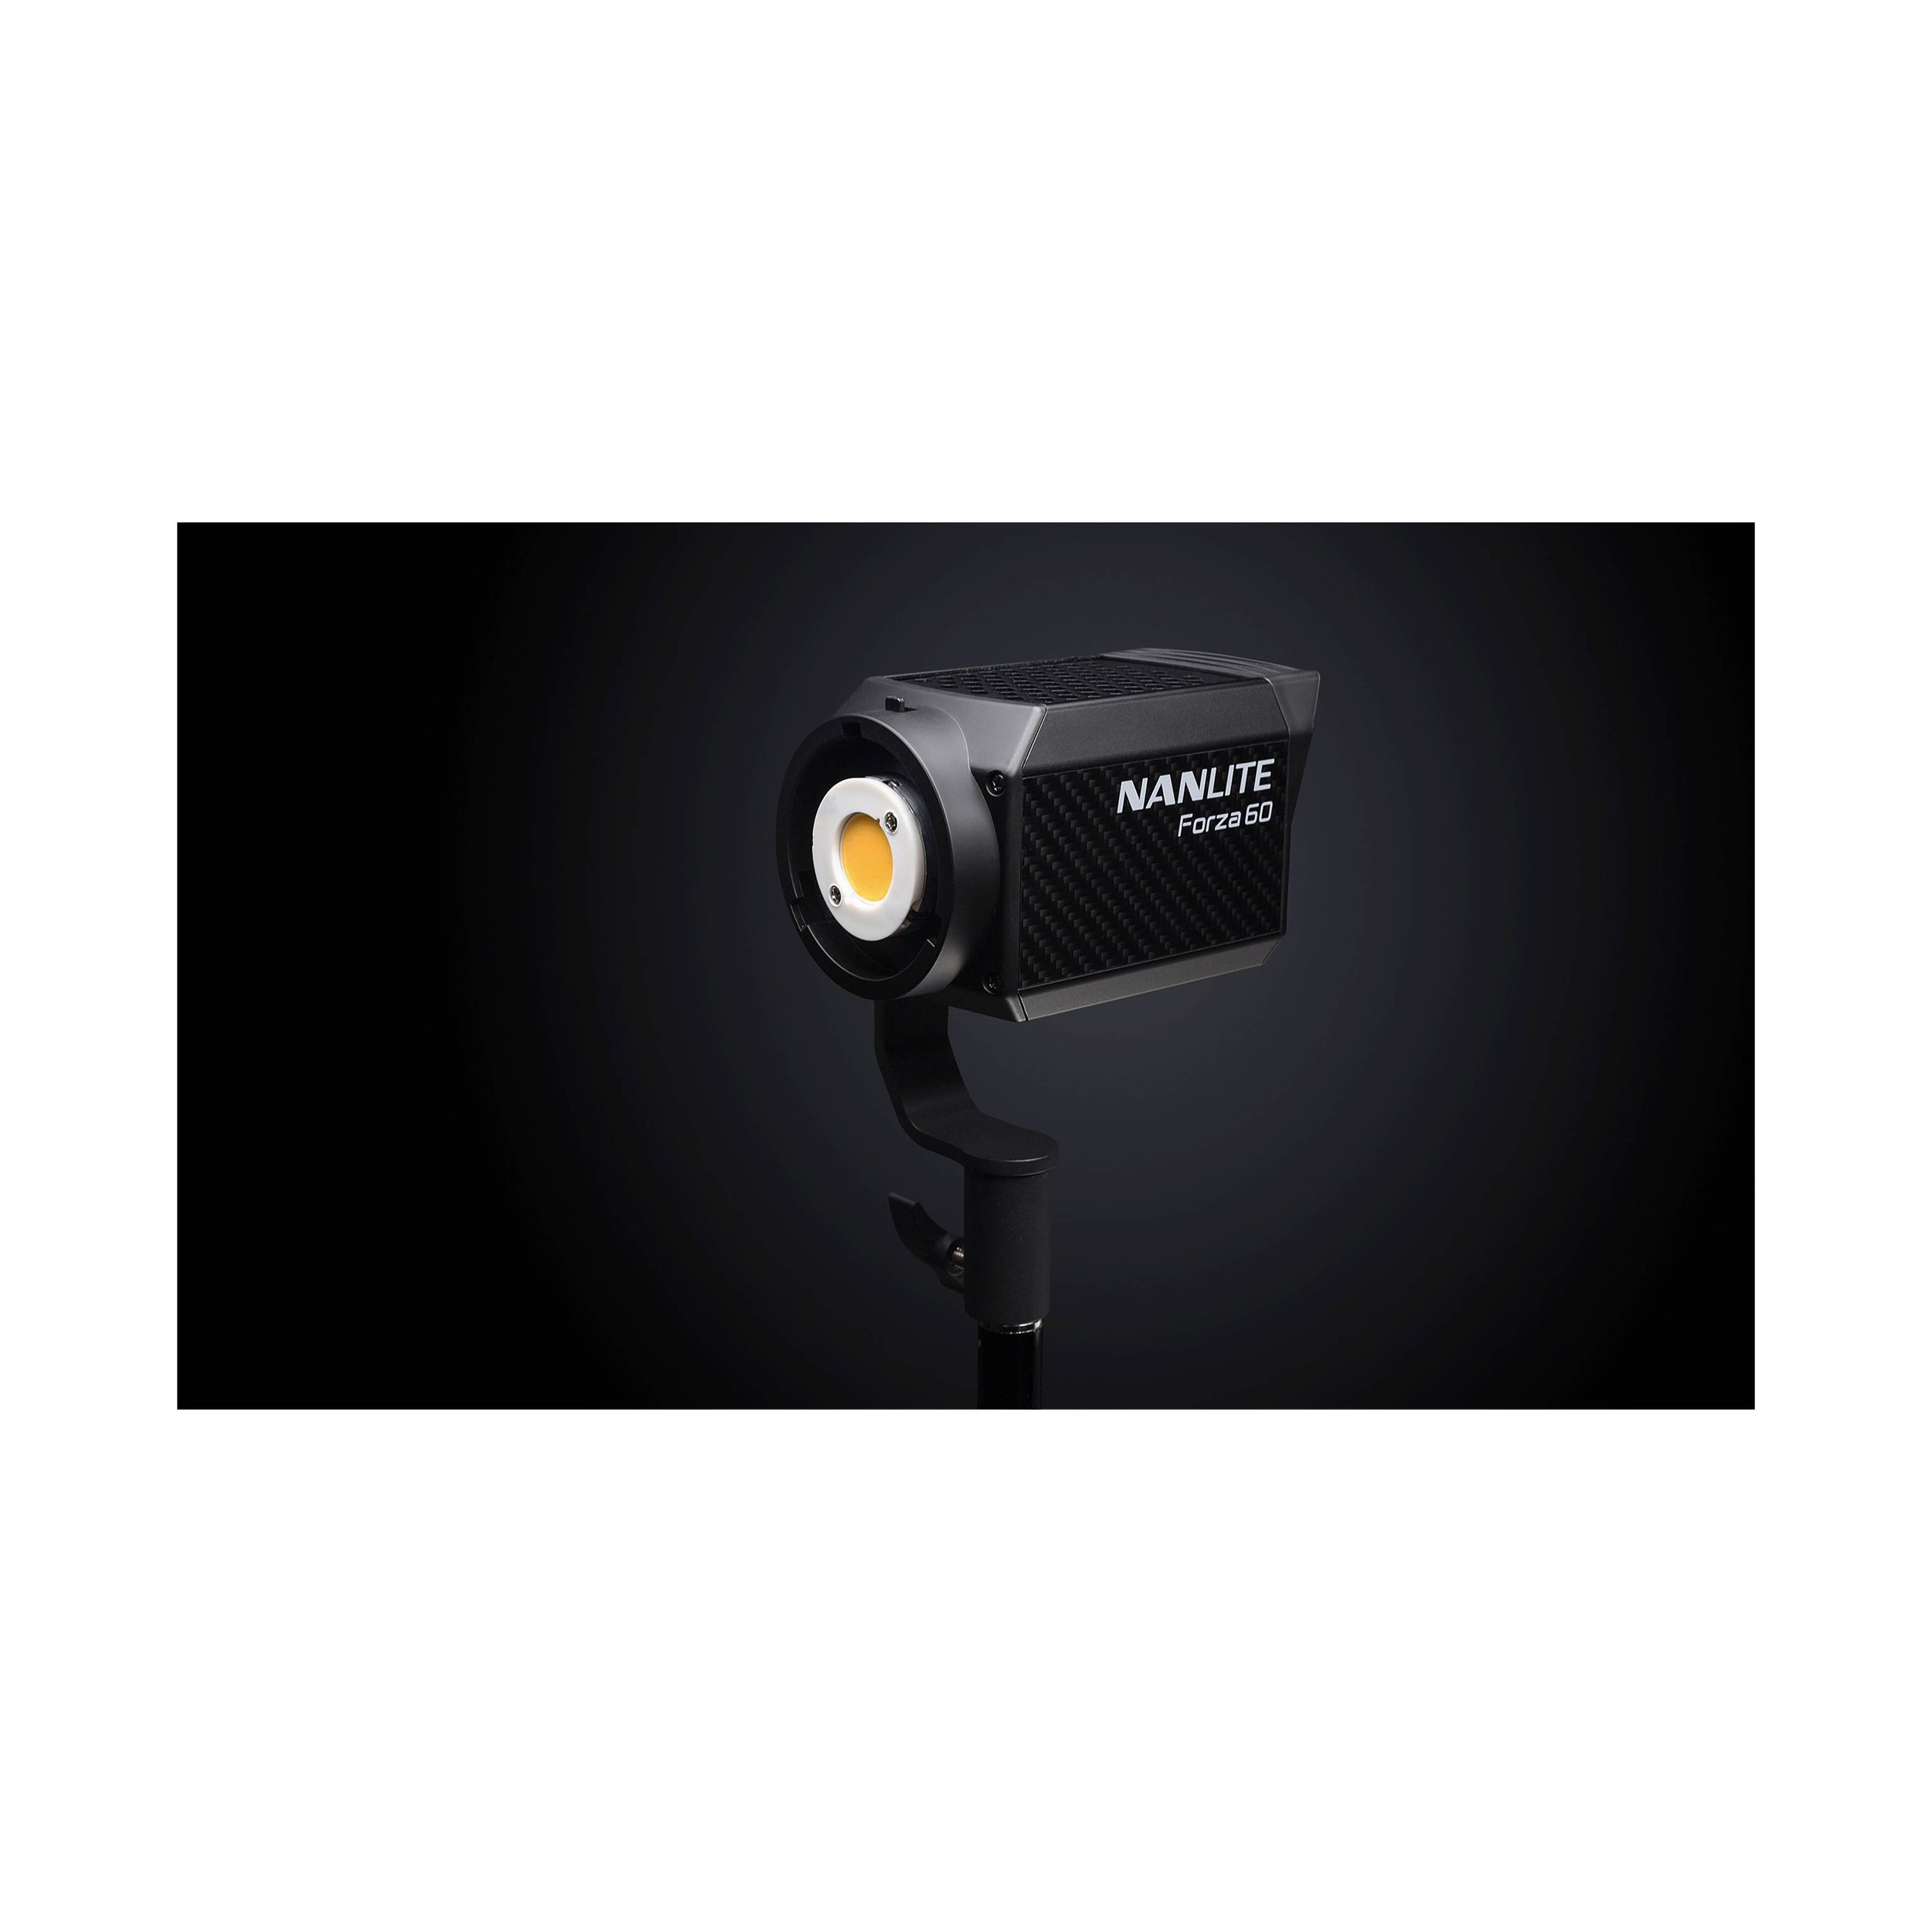 Nanlite Forza 60 LED Monolight